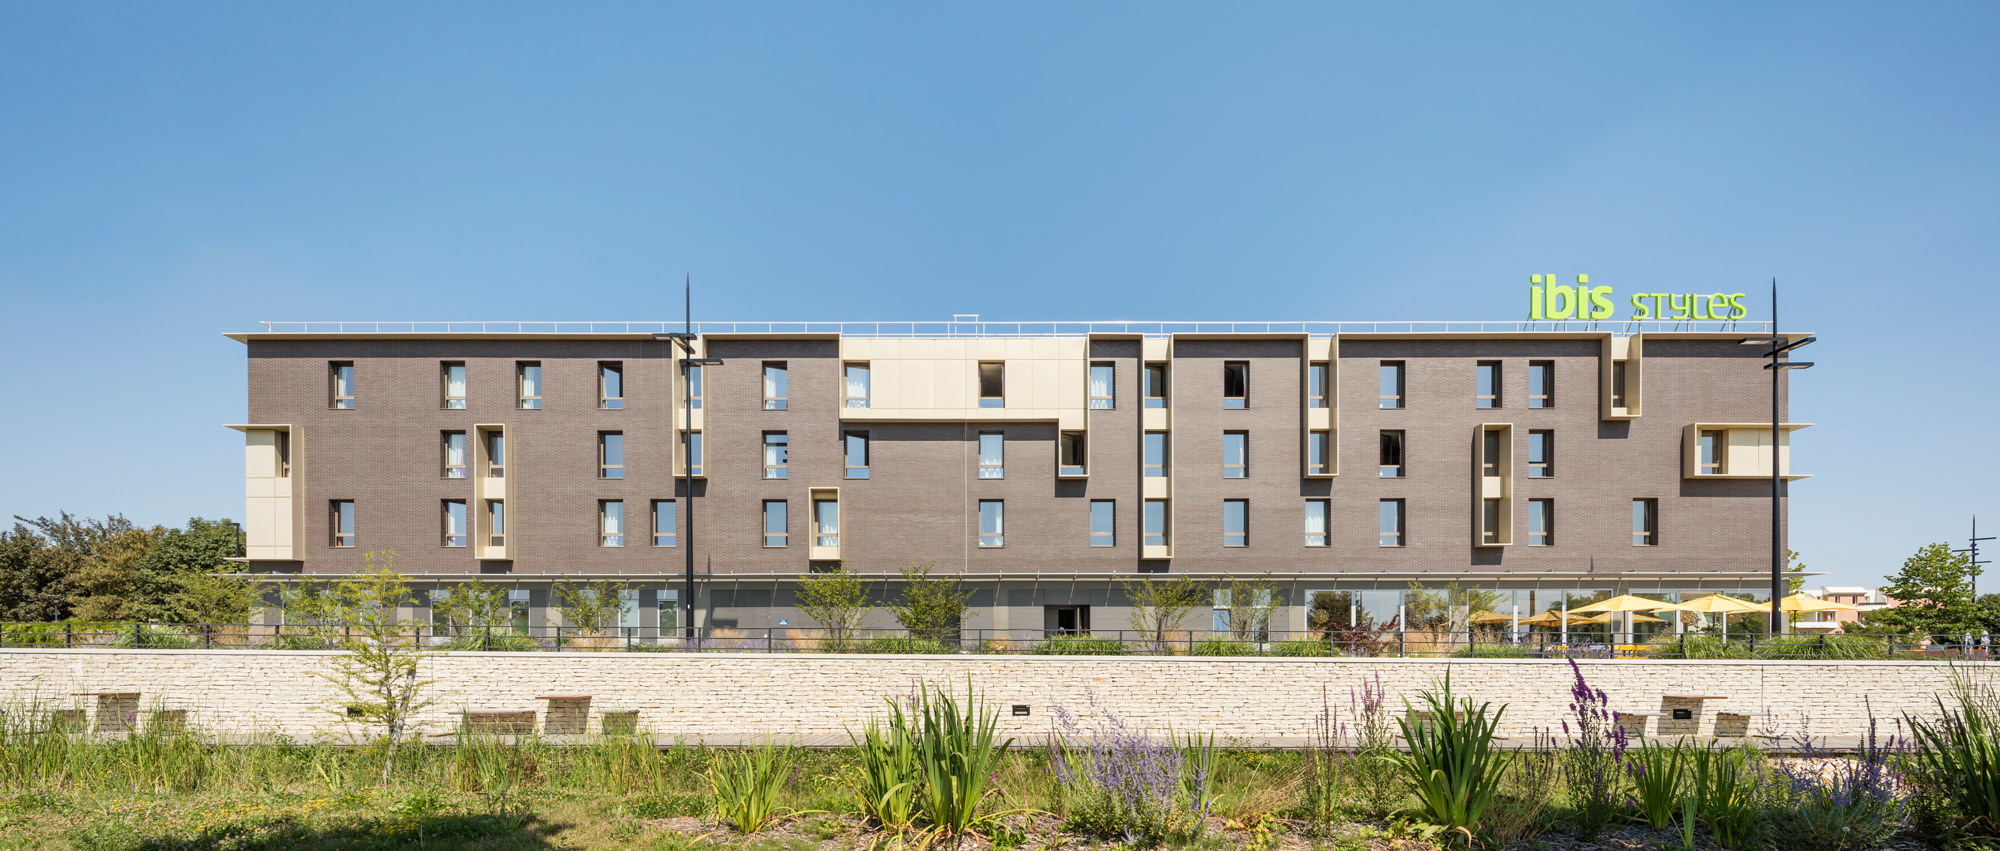 IBIS styles, hôtel, Guyancourt, Zac de Villaroy HGA – Hubert Godet Architectes